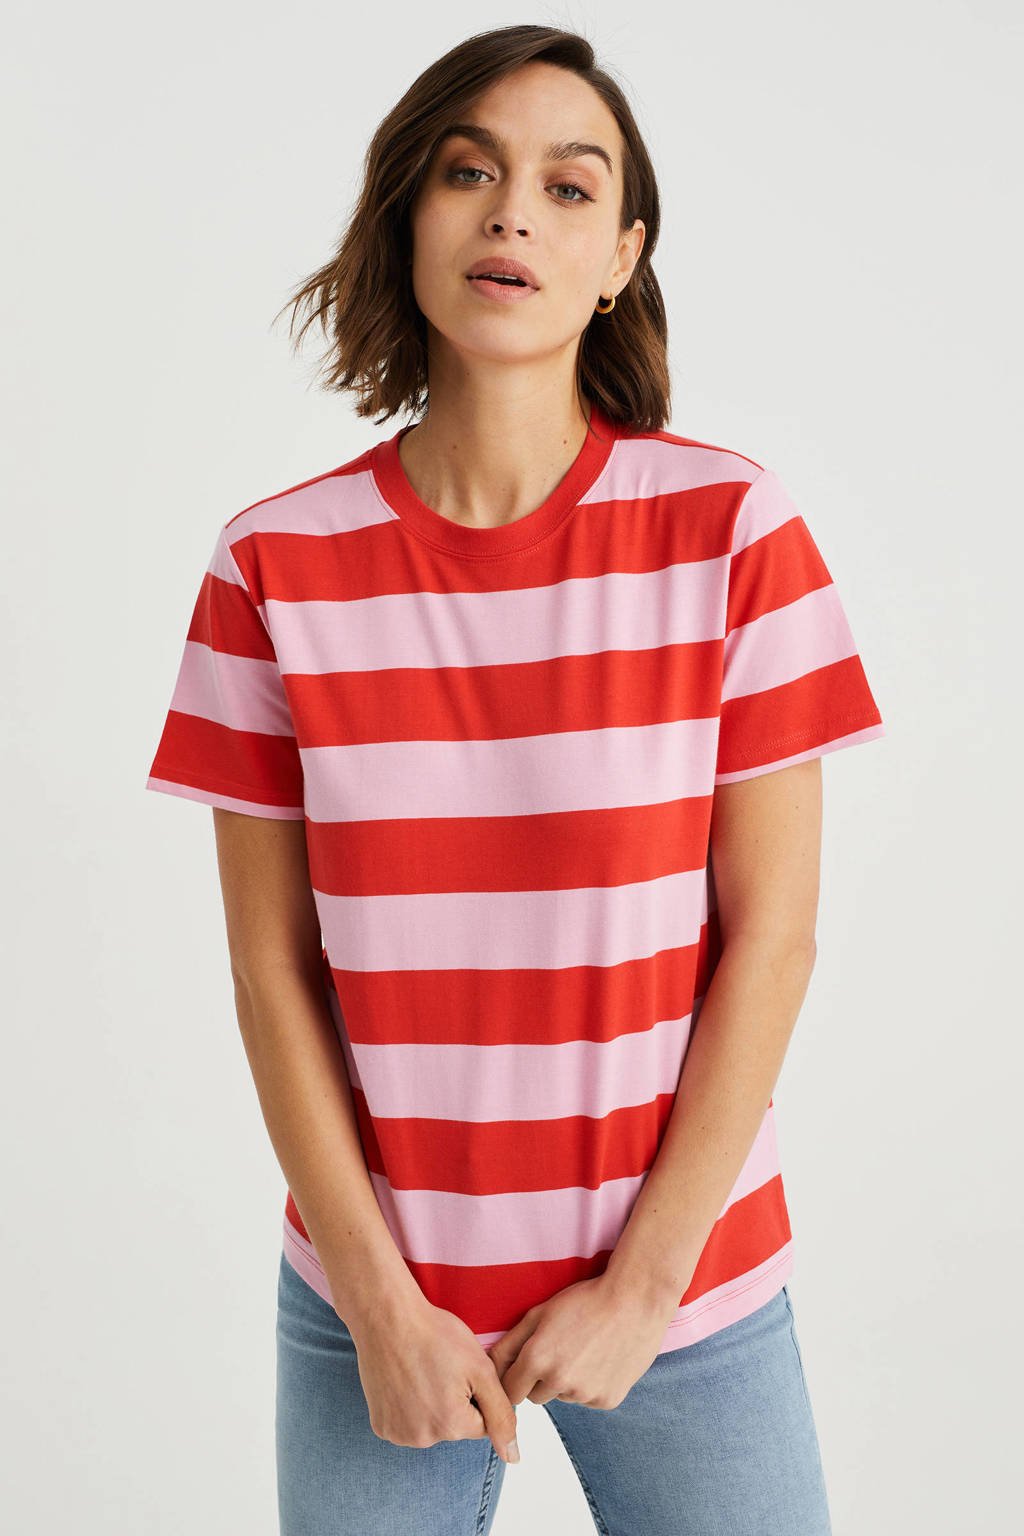 onstabiel Edelsteen Wreed WE Fashion gestreept T-shirt rood/roze | wehkamp